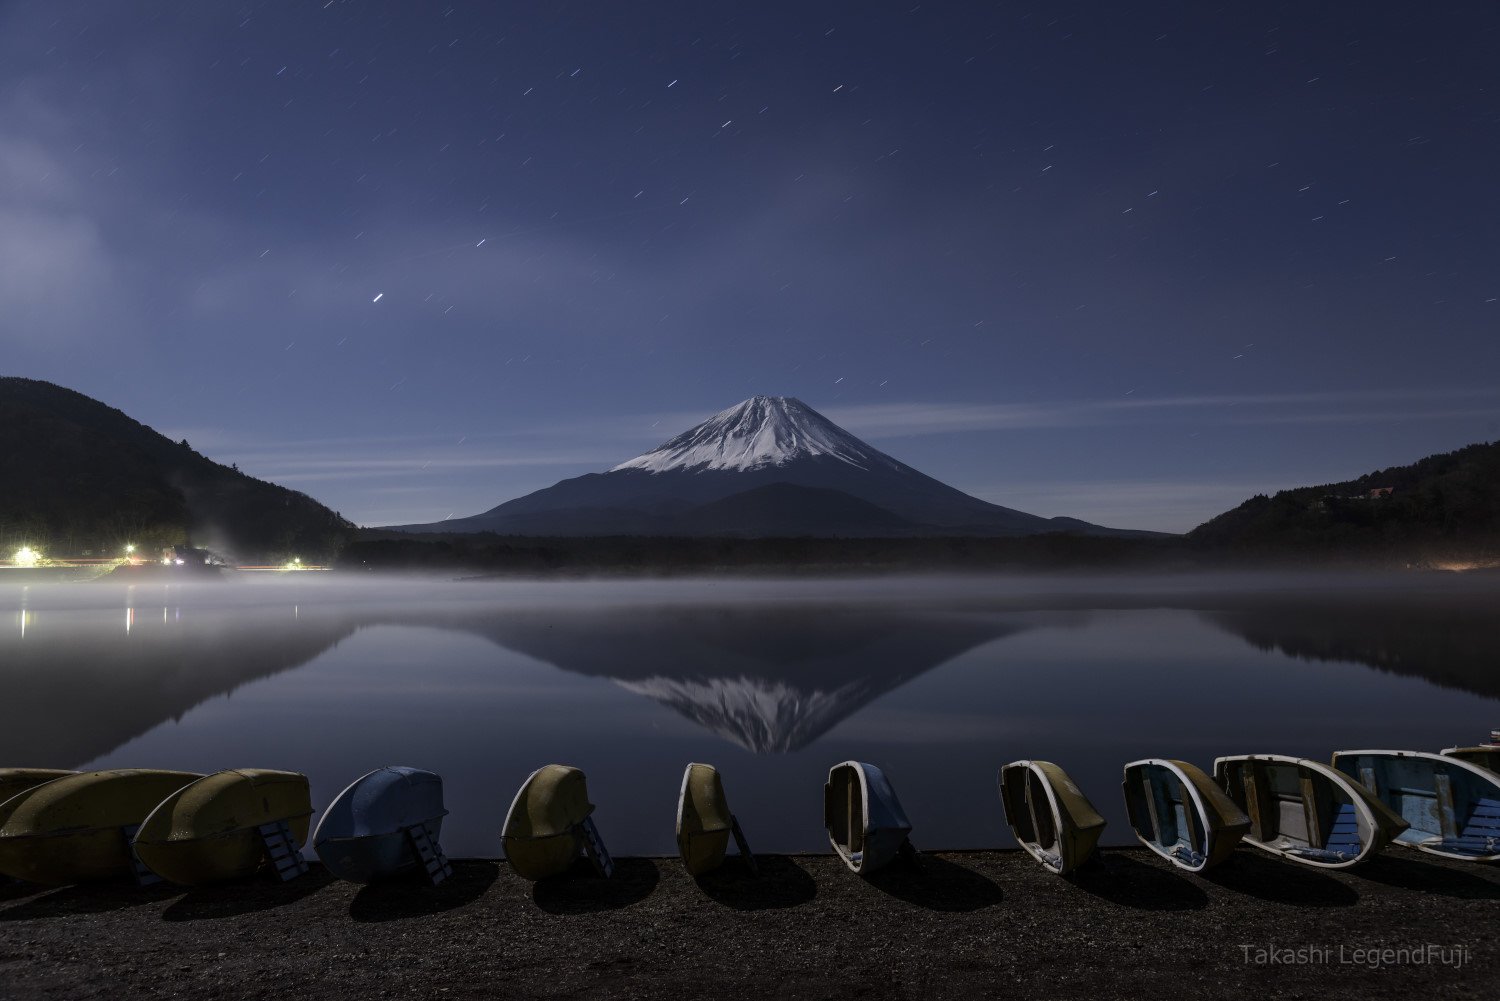 Fuji,mountain,lake,landscape,Japan,reflection,night,boat,water,star,fog,, Takashi